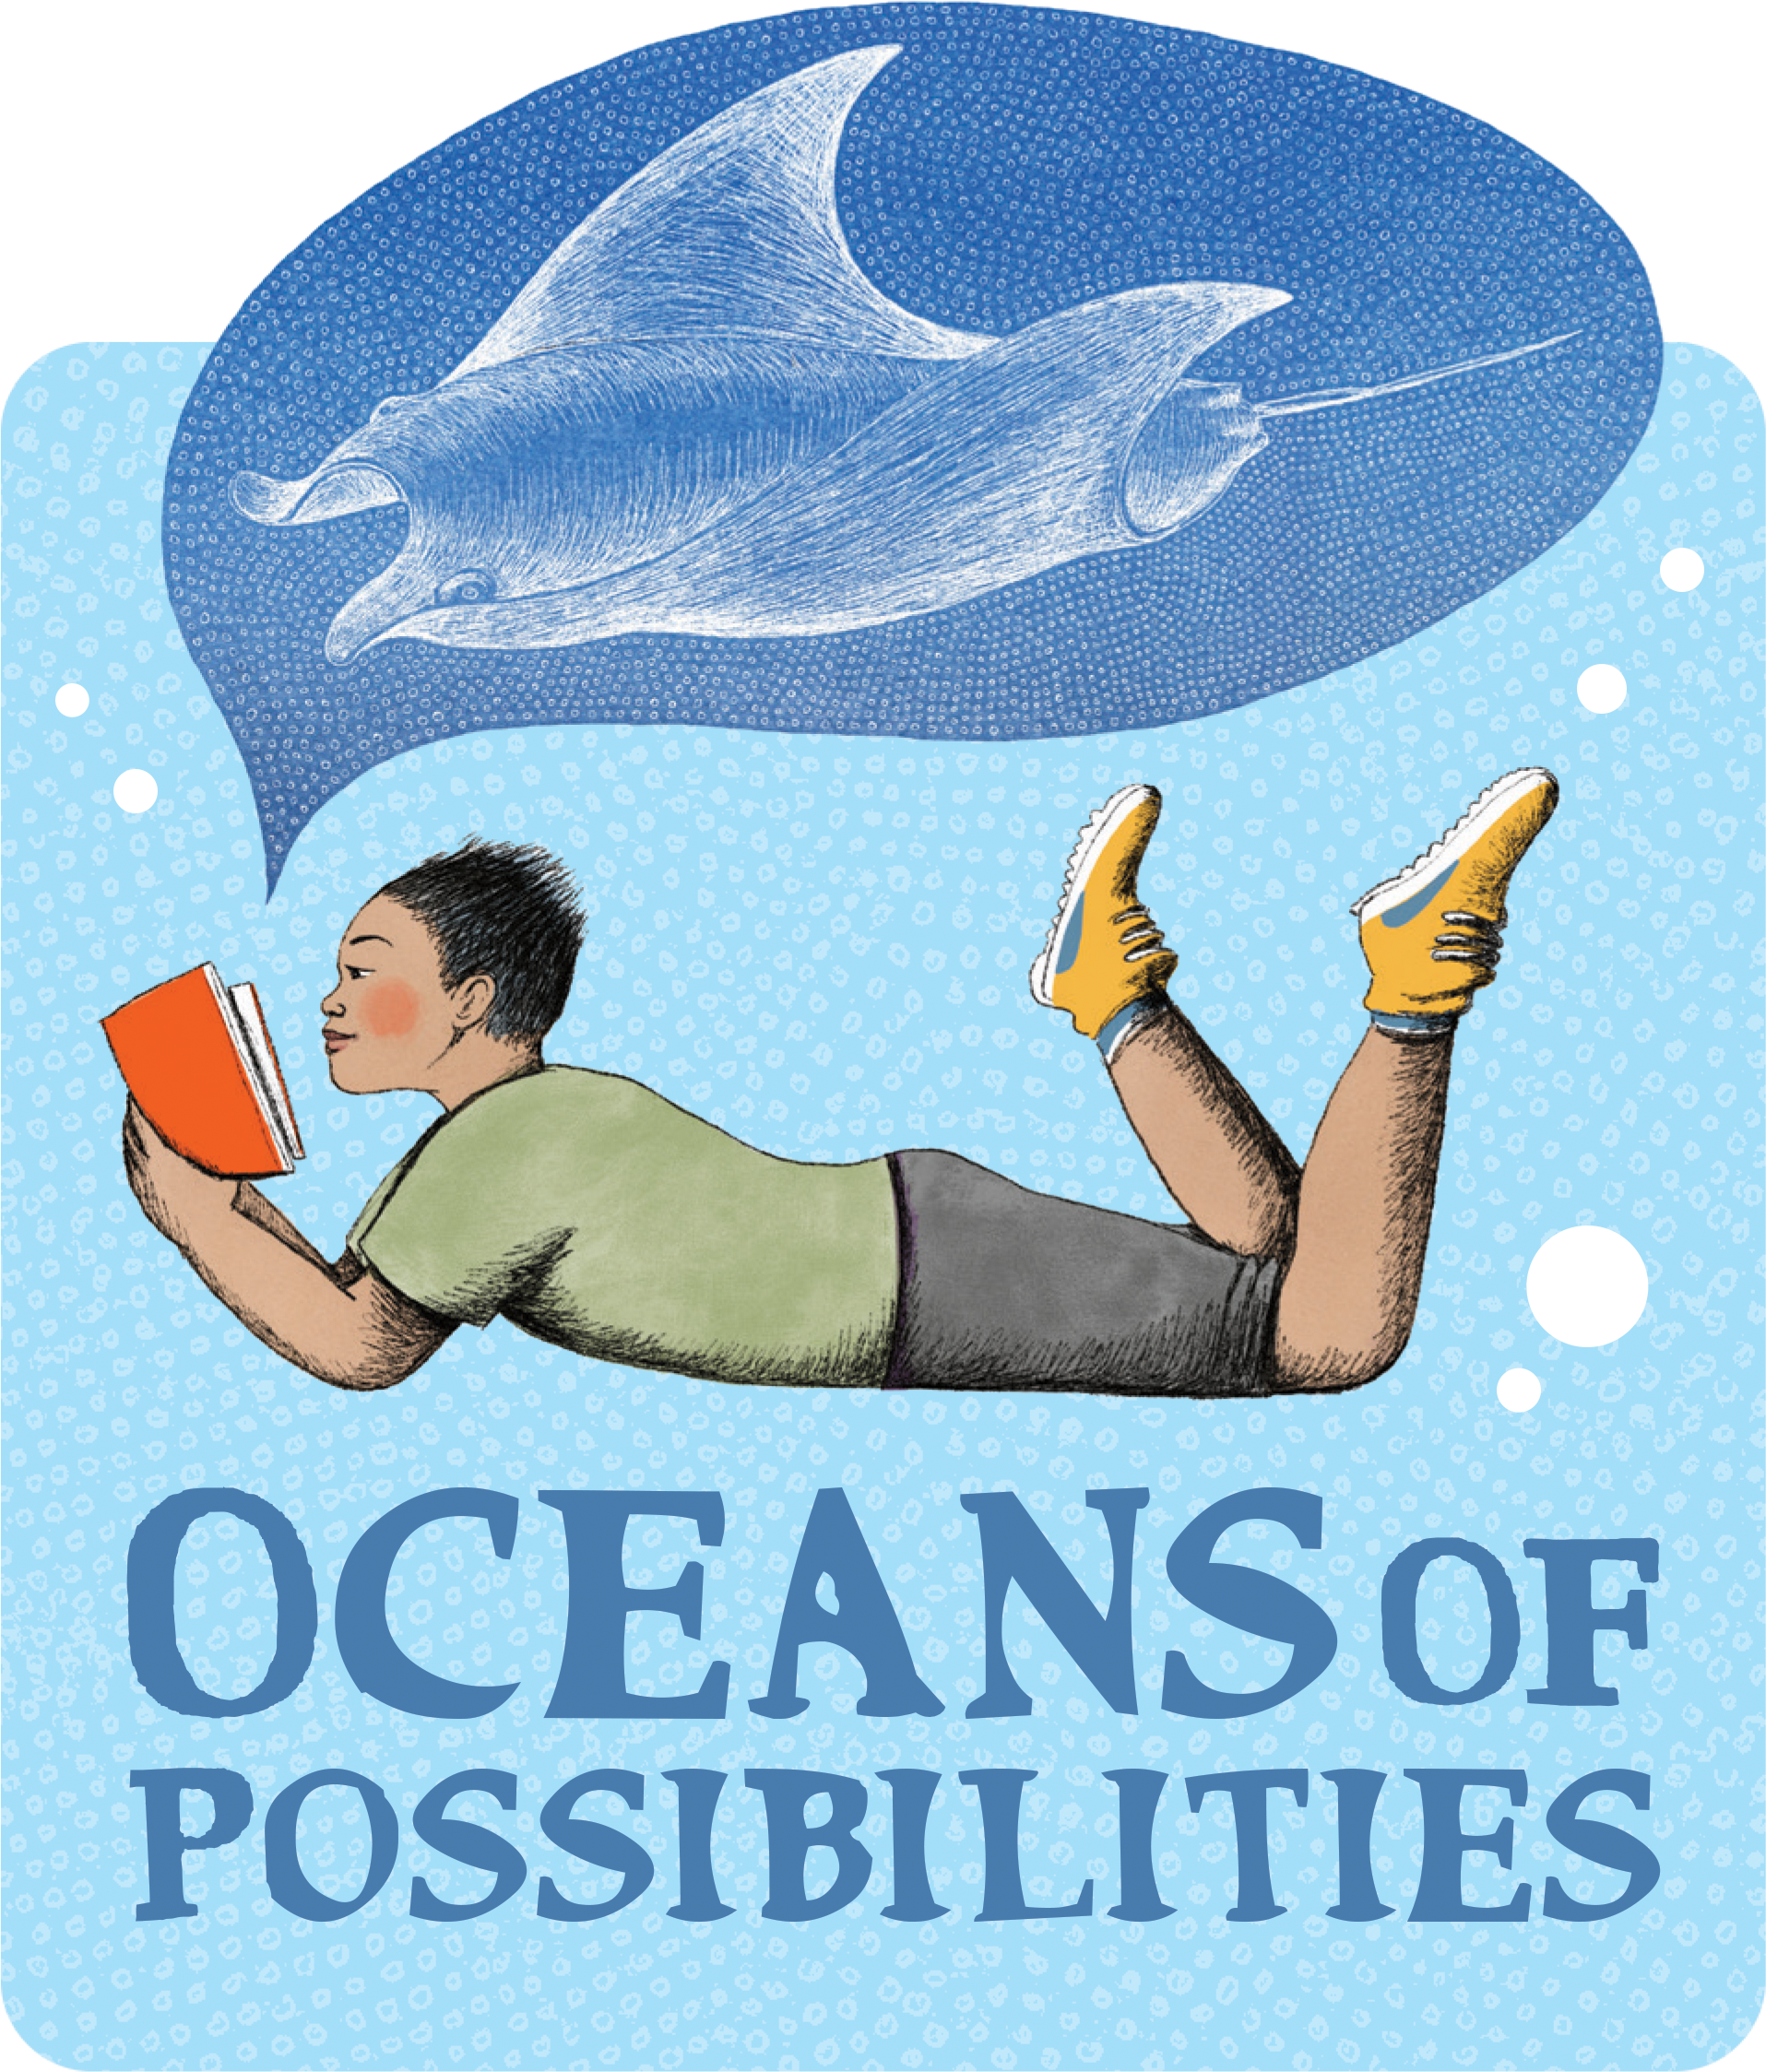 Oceans of Possibilities